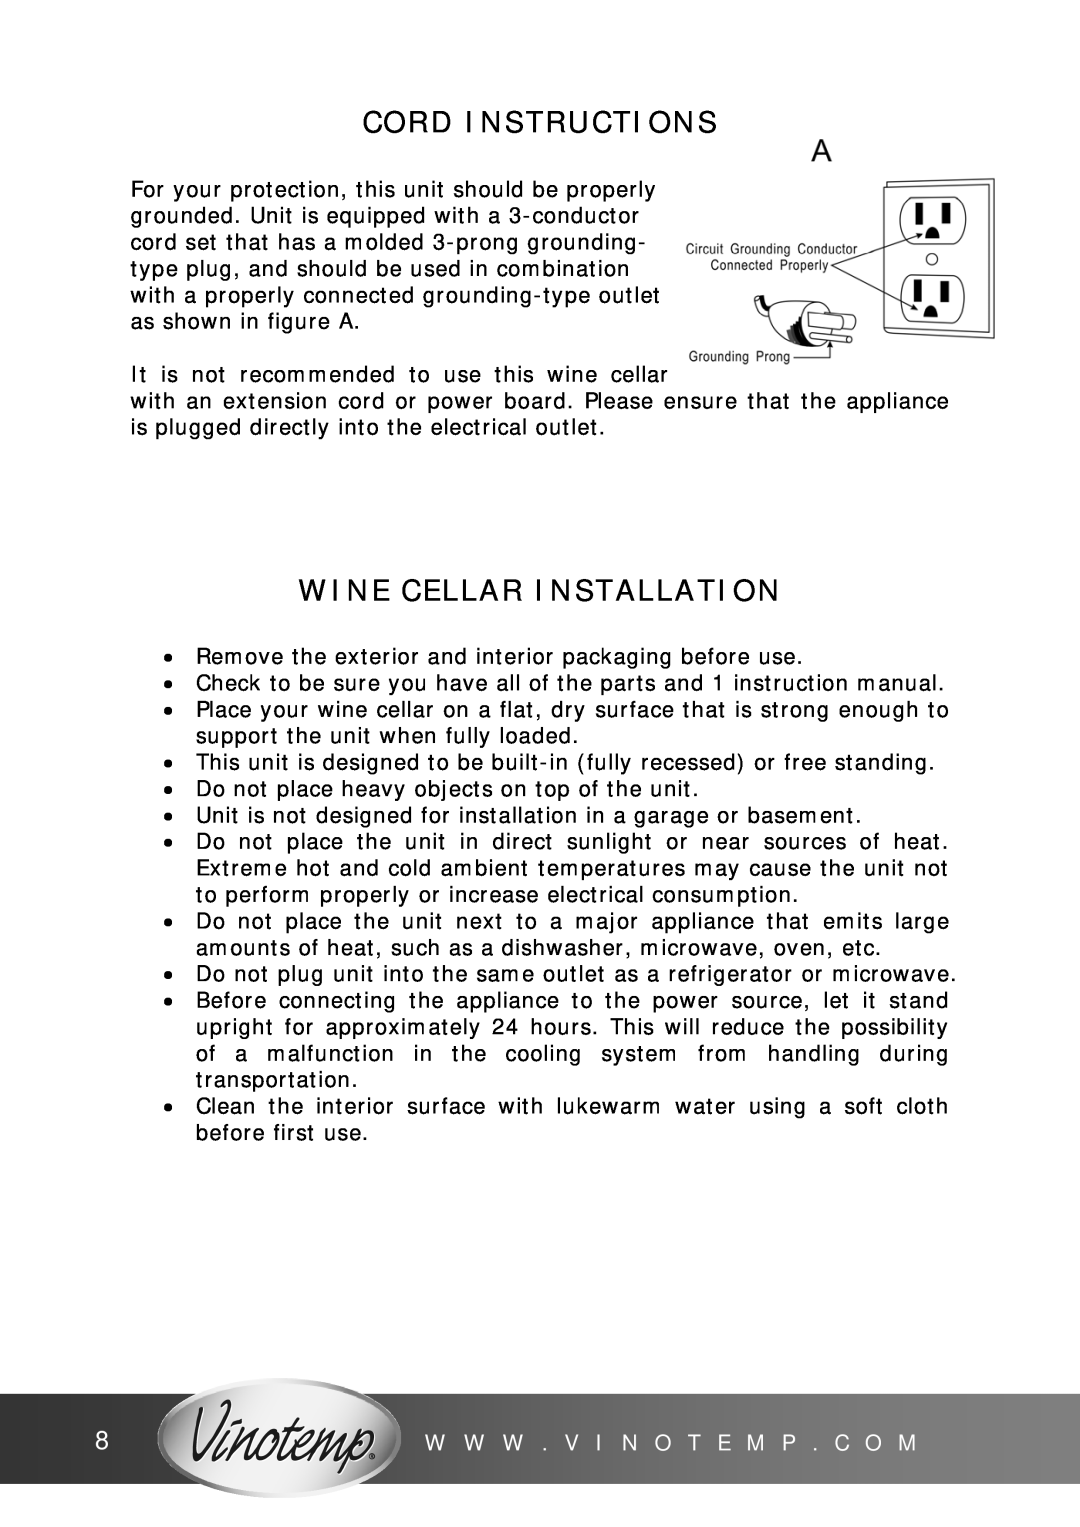 Vinotemp VT-26 owner manual Cord Instructions, Wine Cellar Installation, W W W . V I N O T E M P . C O M 